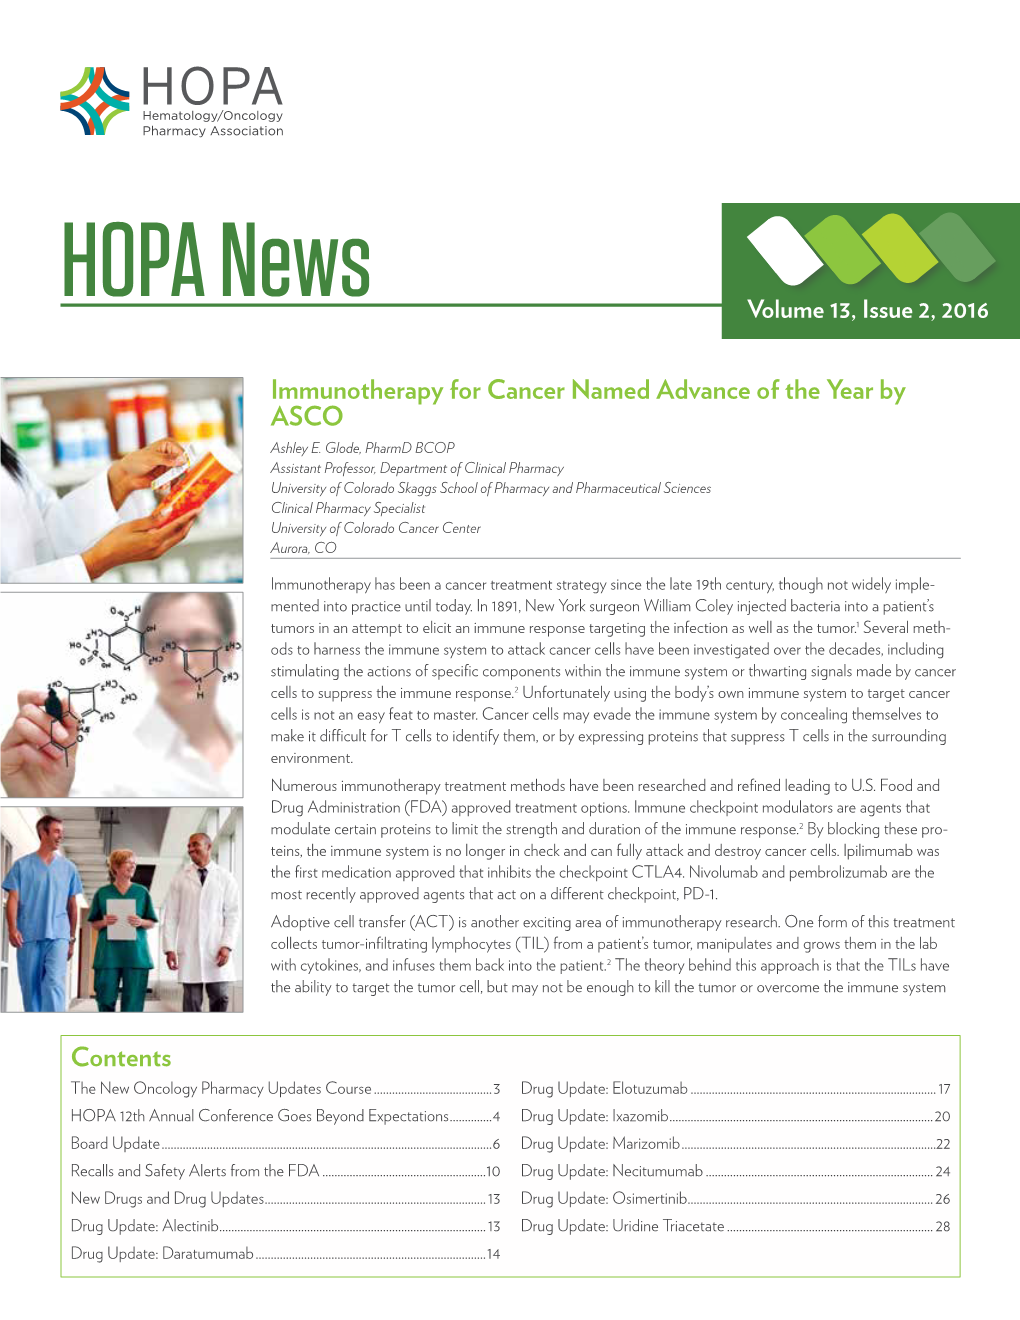 HOPA News Volume 13, Issue 2, 2016